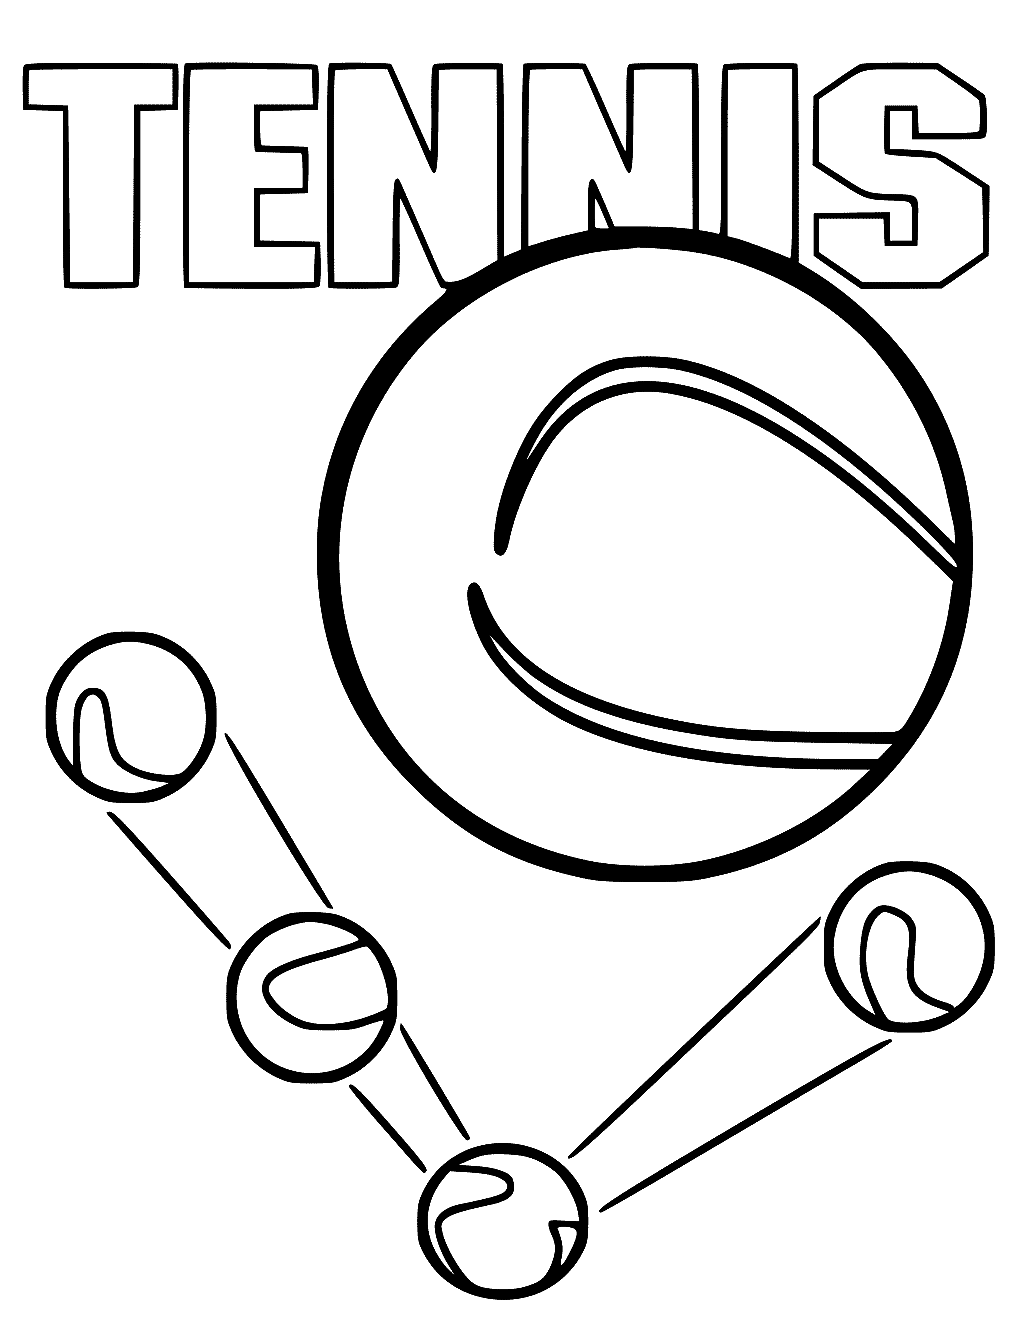 Printable Tennis Coloring Page